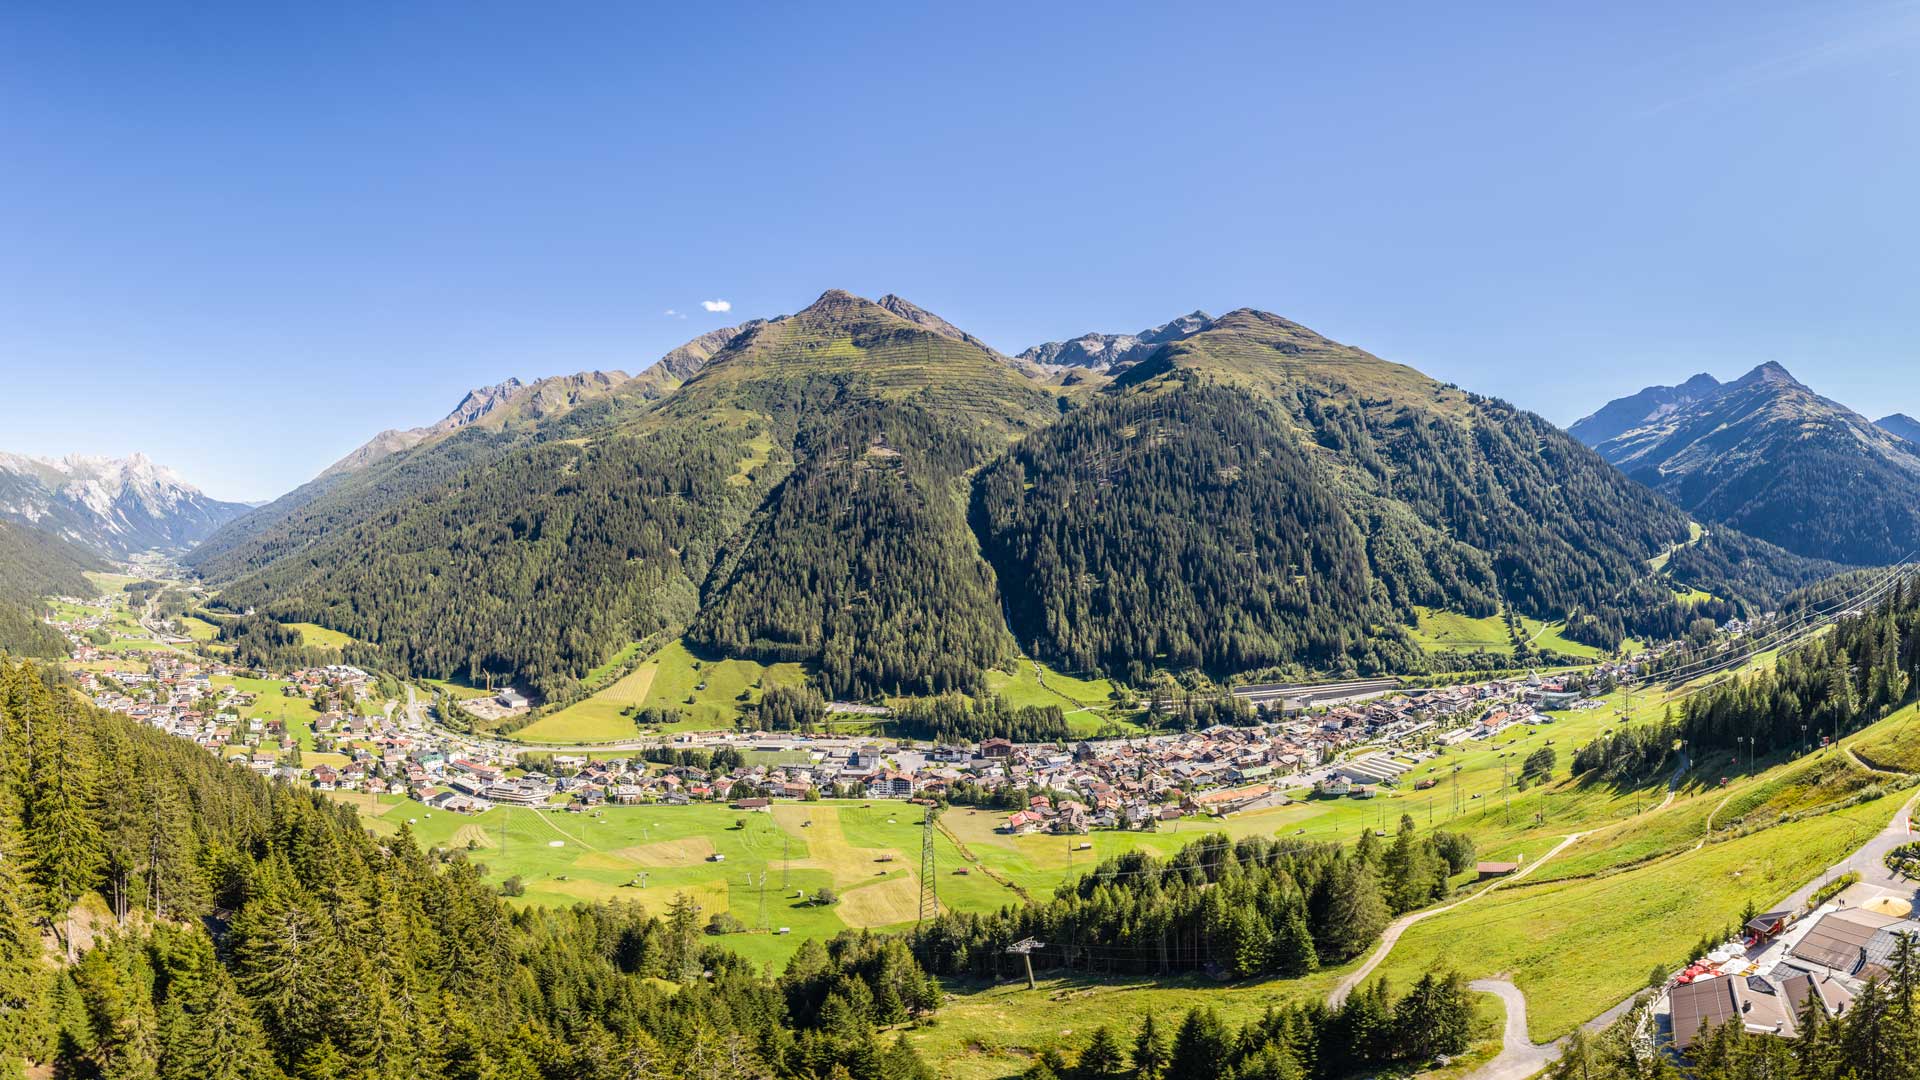 <span class="vcard">Tourismusverband St. Anton am Arlberg</span>